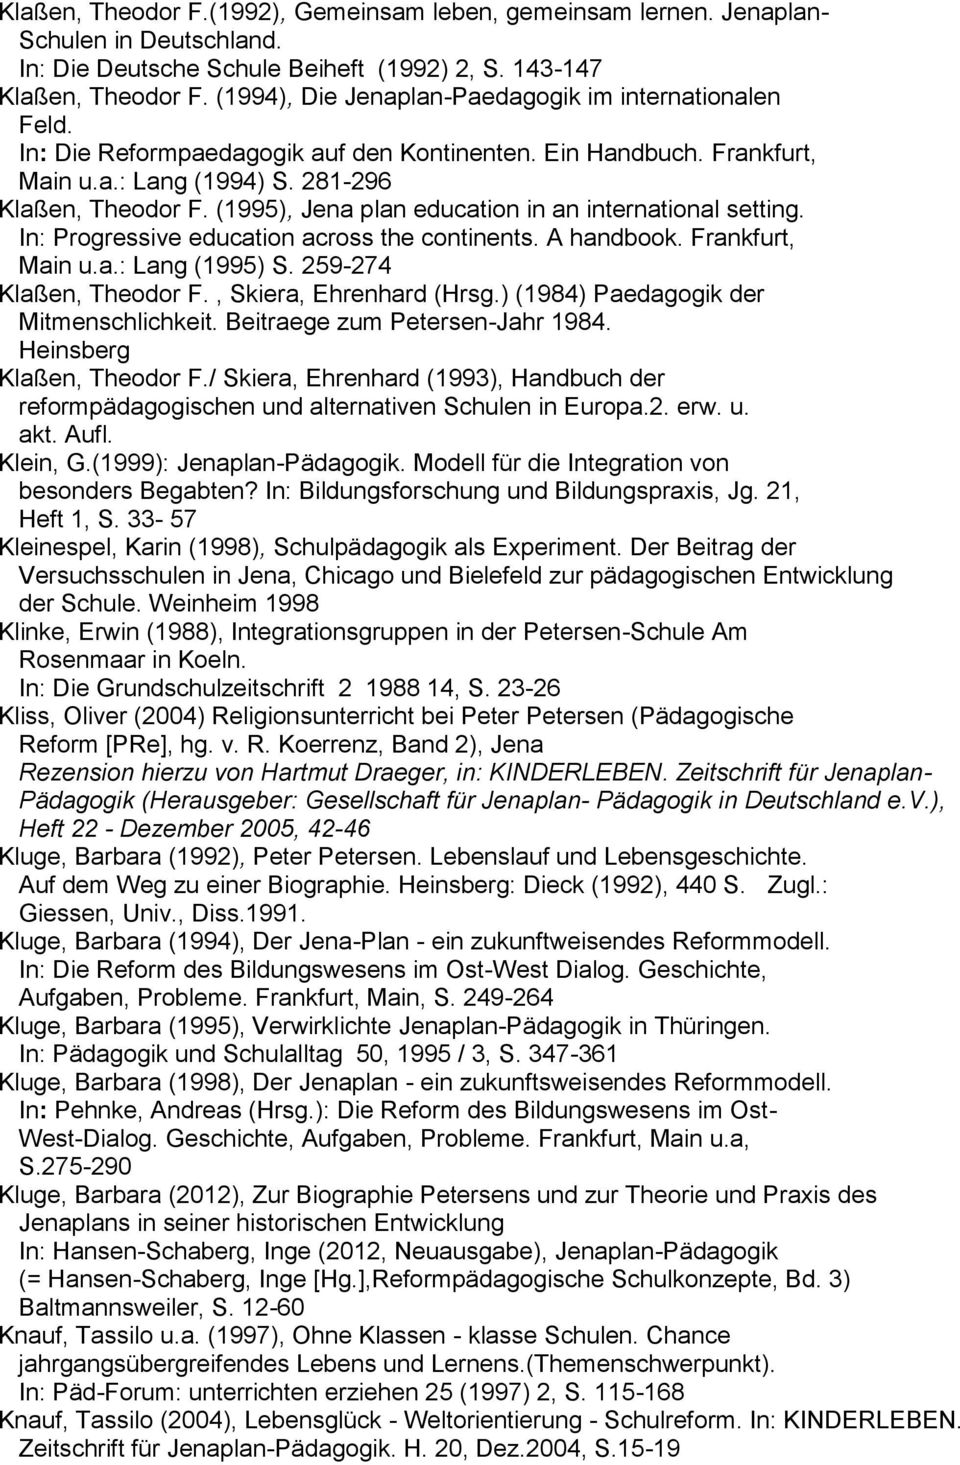 (1995), Jena plan education in an international setting. In: Progressive education across the continents. A handbook. Frankfurt, Main u.a.: Lang (1995) S. 259-274 Klaßen, Theodor F.